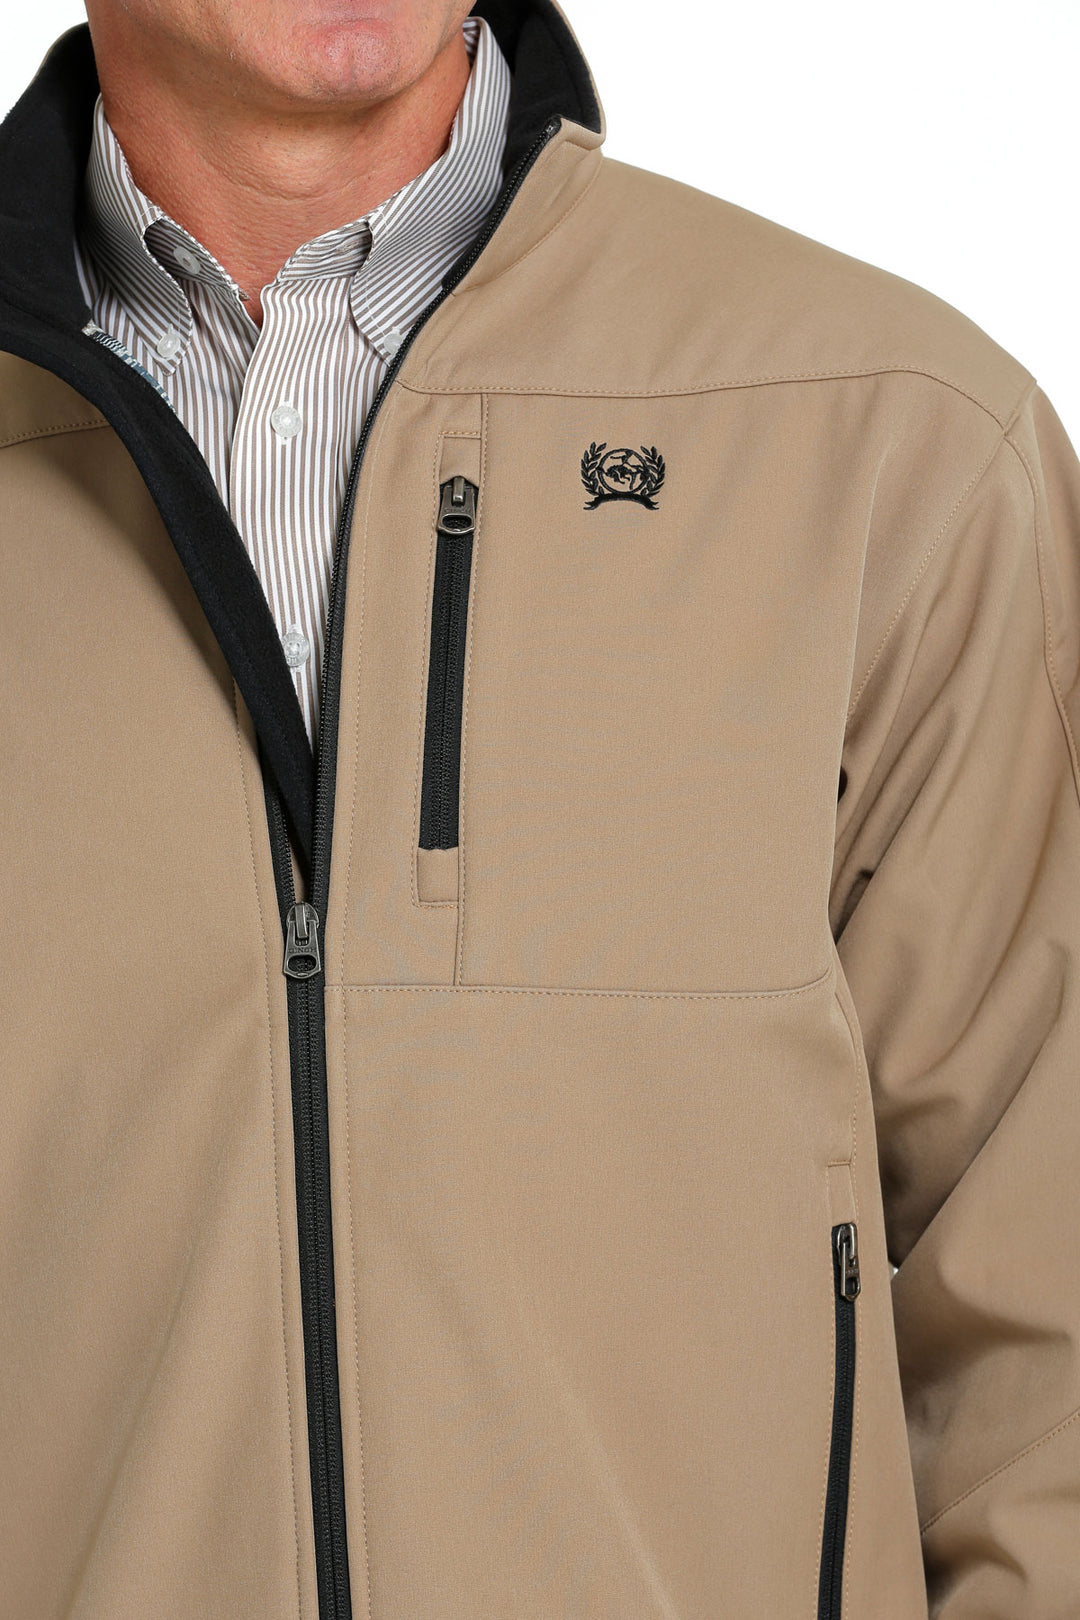 Cinch Men's Brown Solid Bonded Jacket